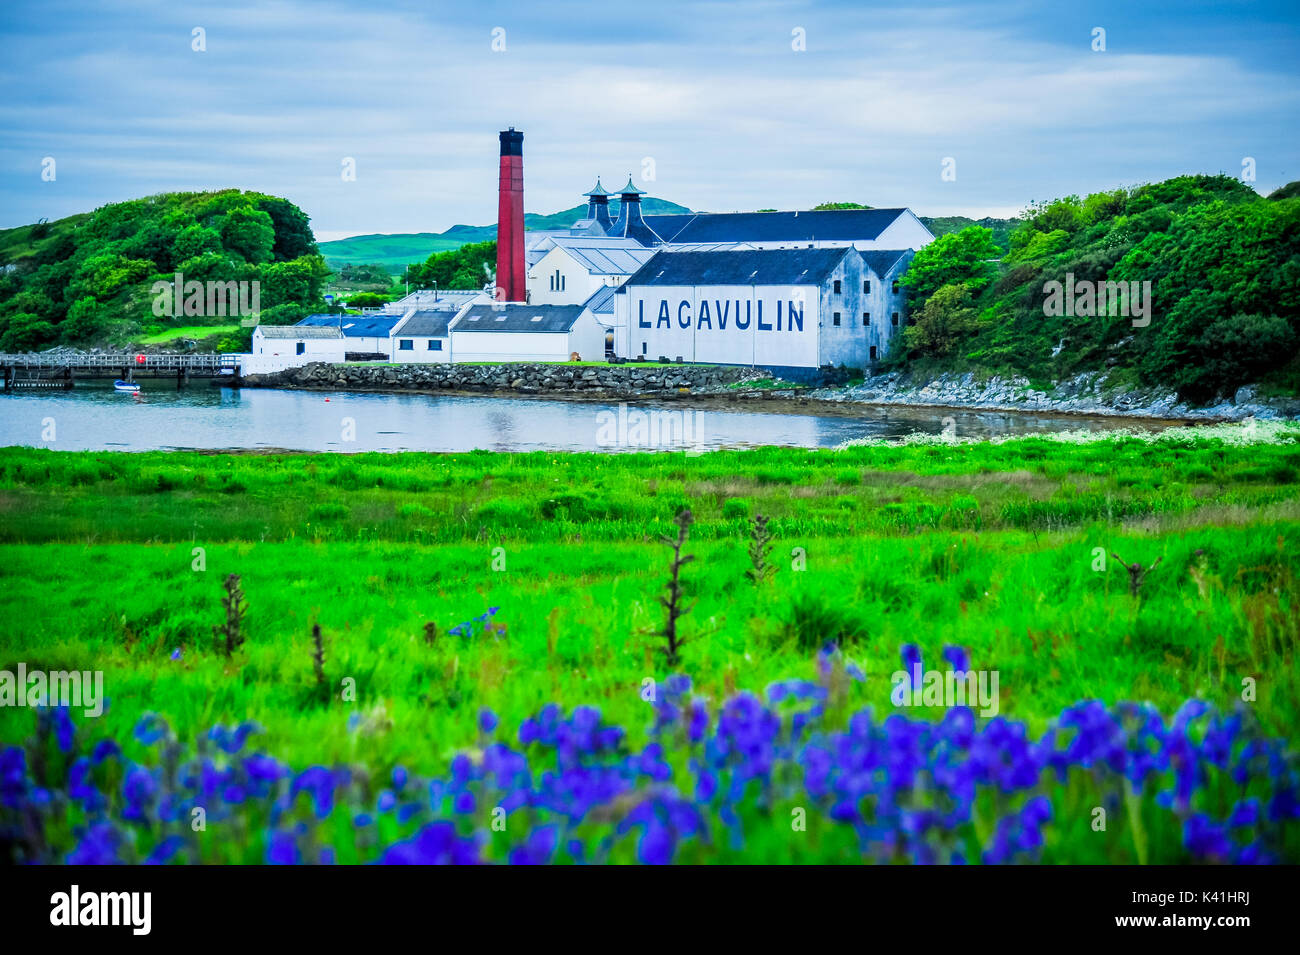 La distillerie de lagavulin, Isle of islay, Ecosse Banque D'Images